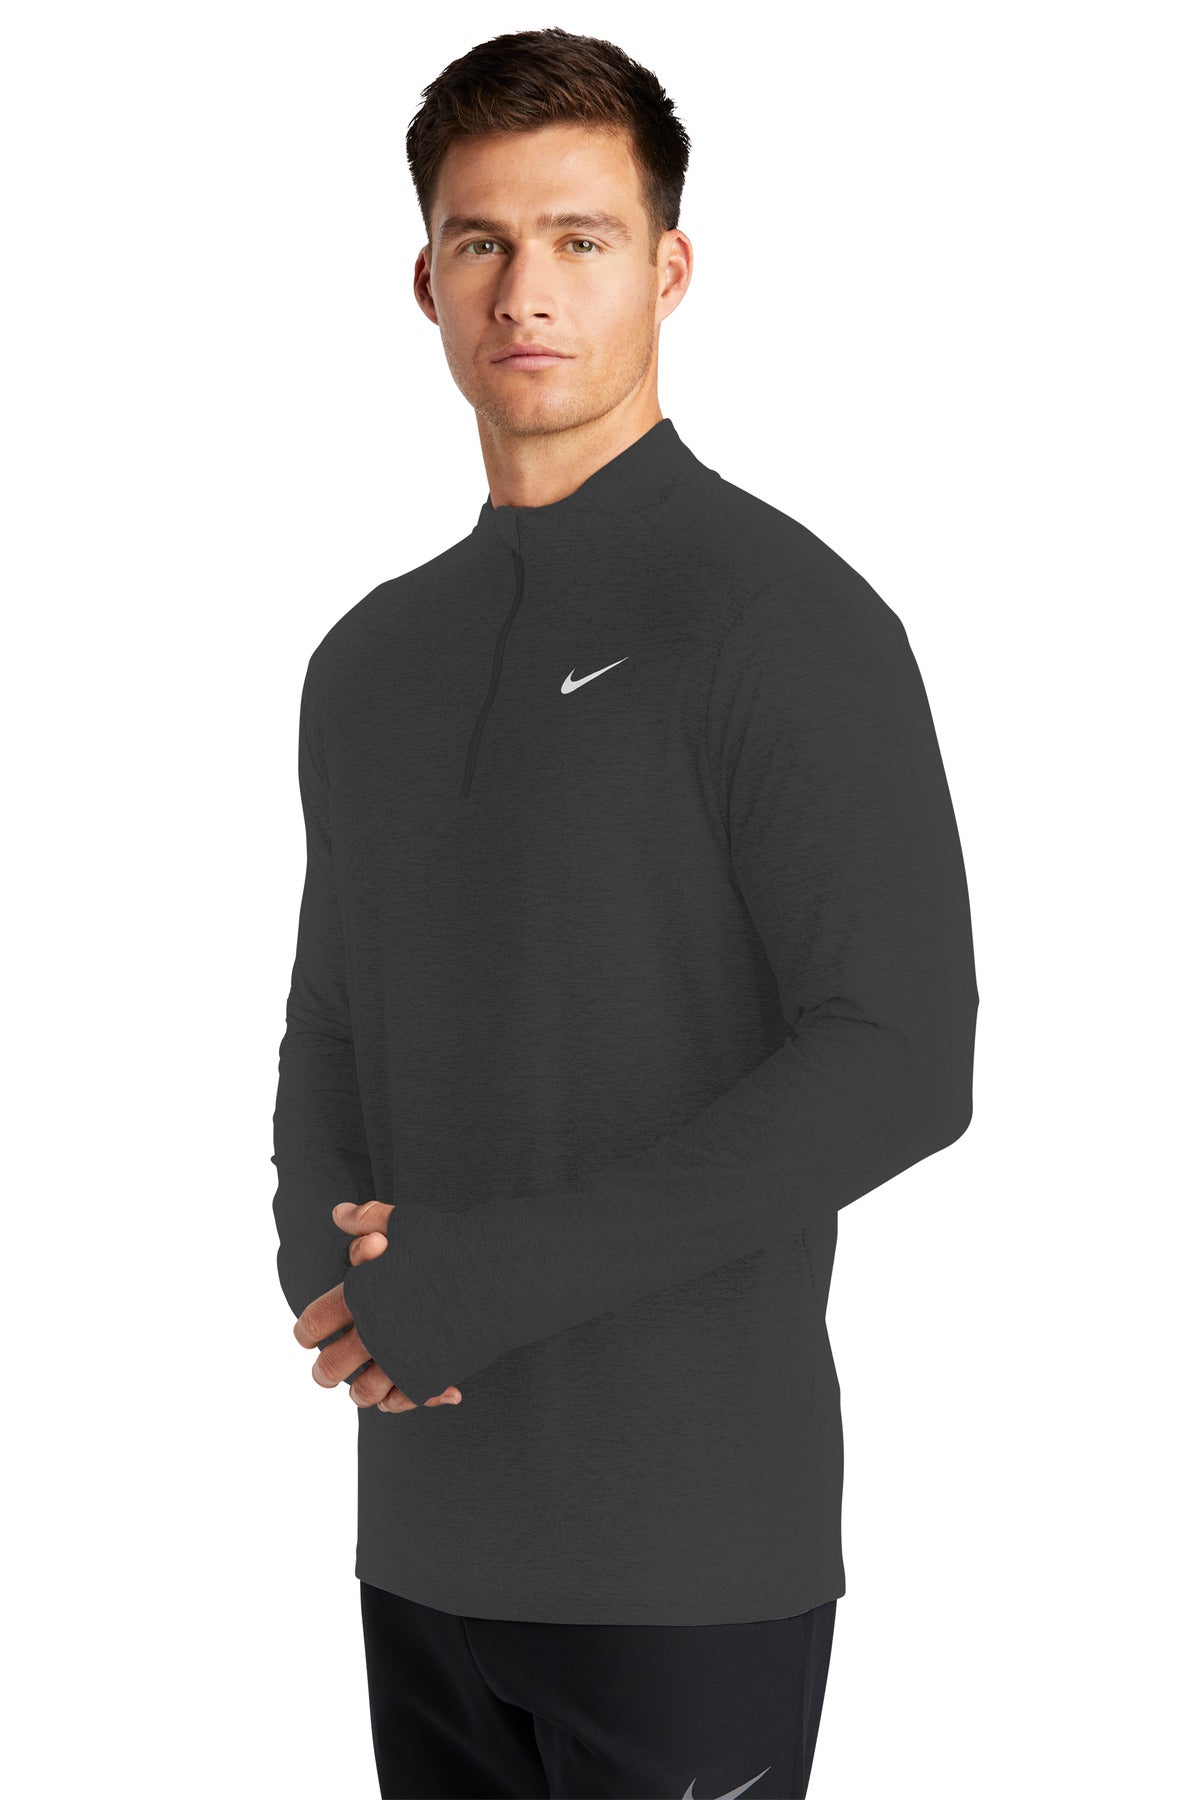 Nike Dri-FIT Element 1/2-Zip Top NKDH4949 - BT Imprintables Shirts